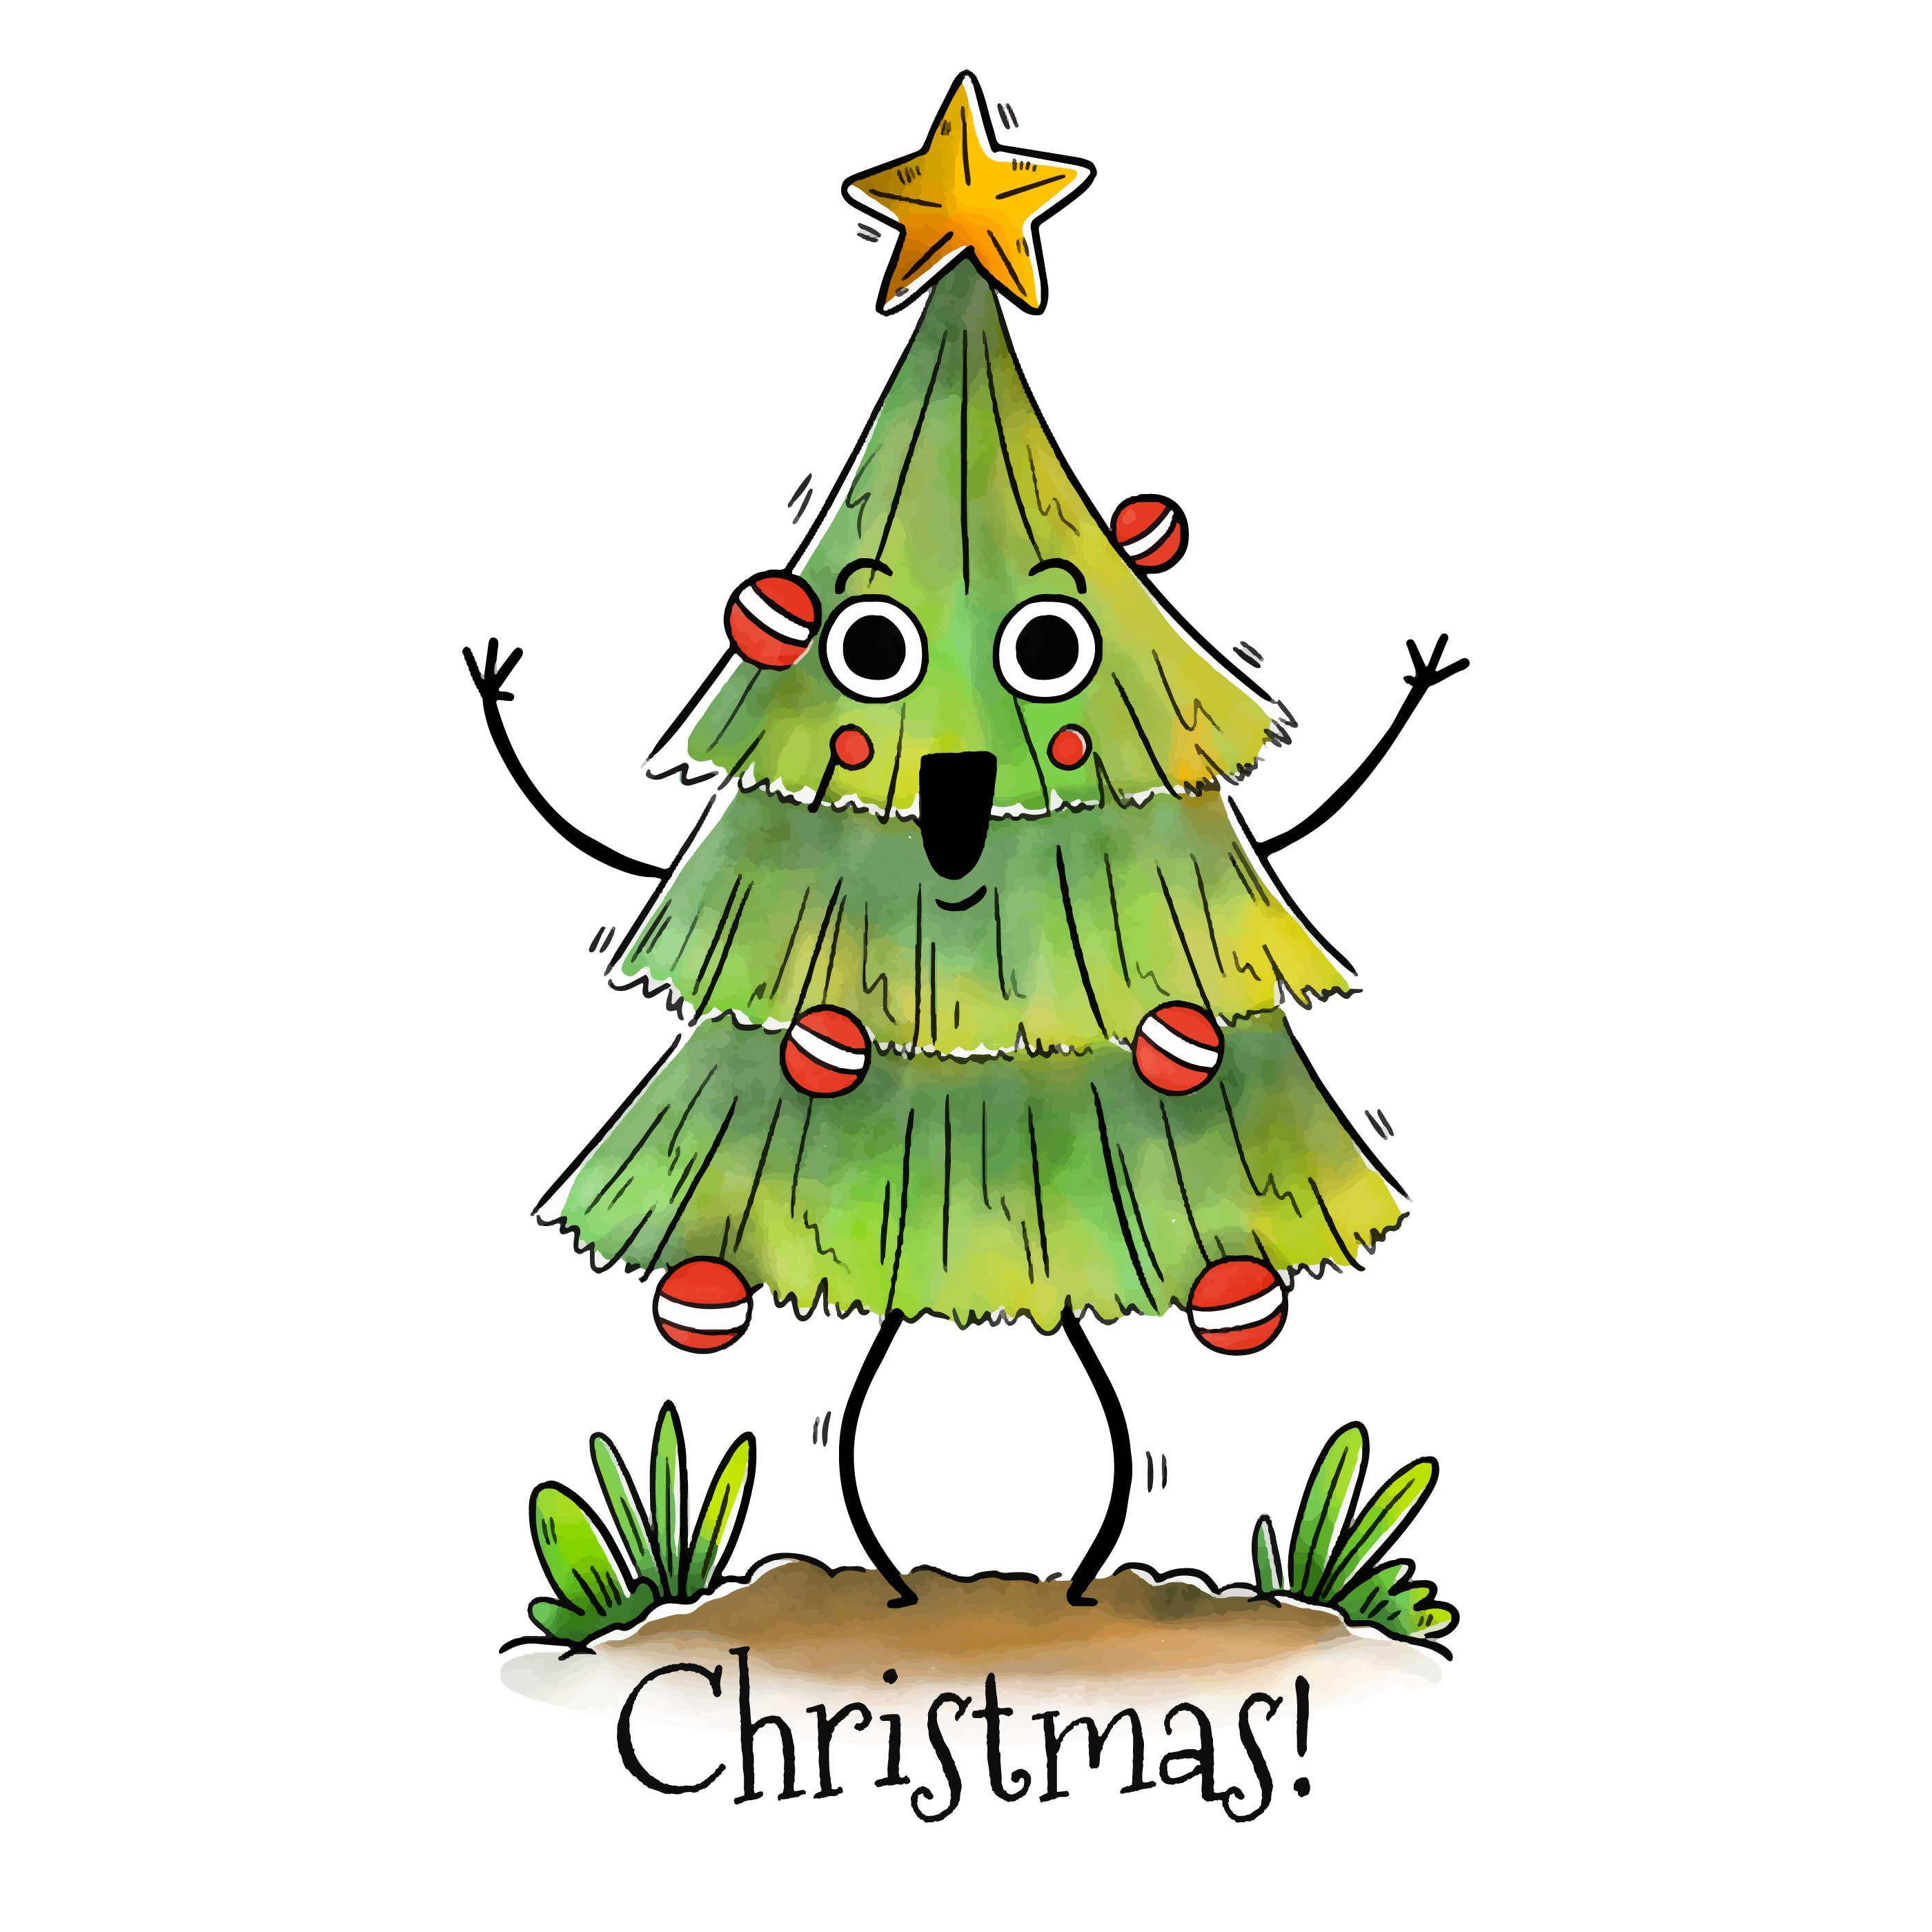 Cute Smiling Christmas Tree Vector - Download Free Vectors ...